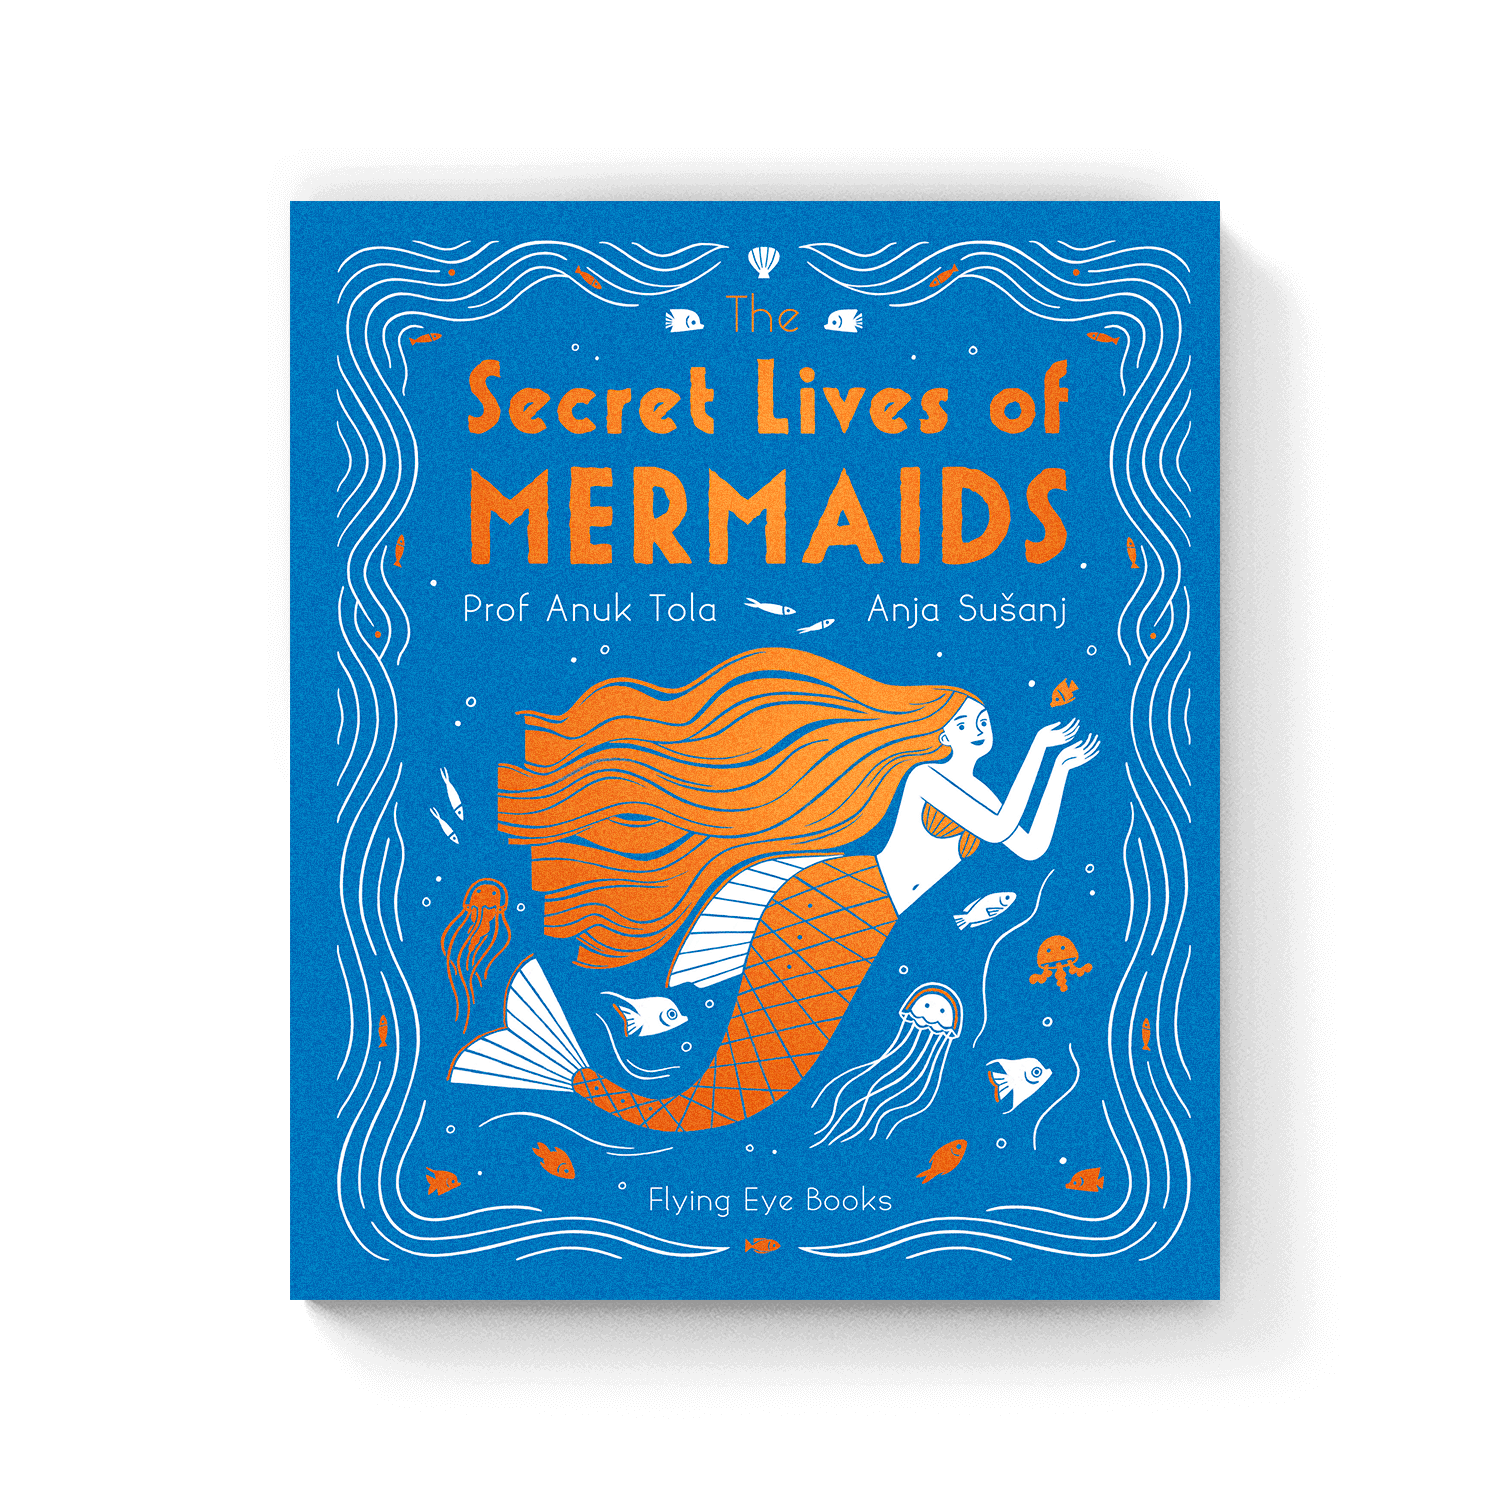 The Secret Lives of Mermaids